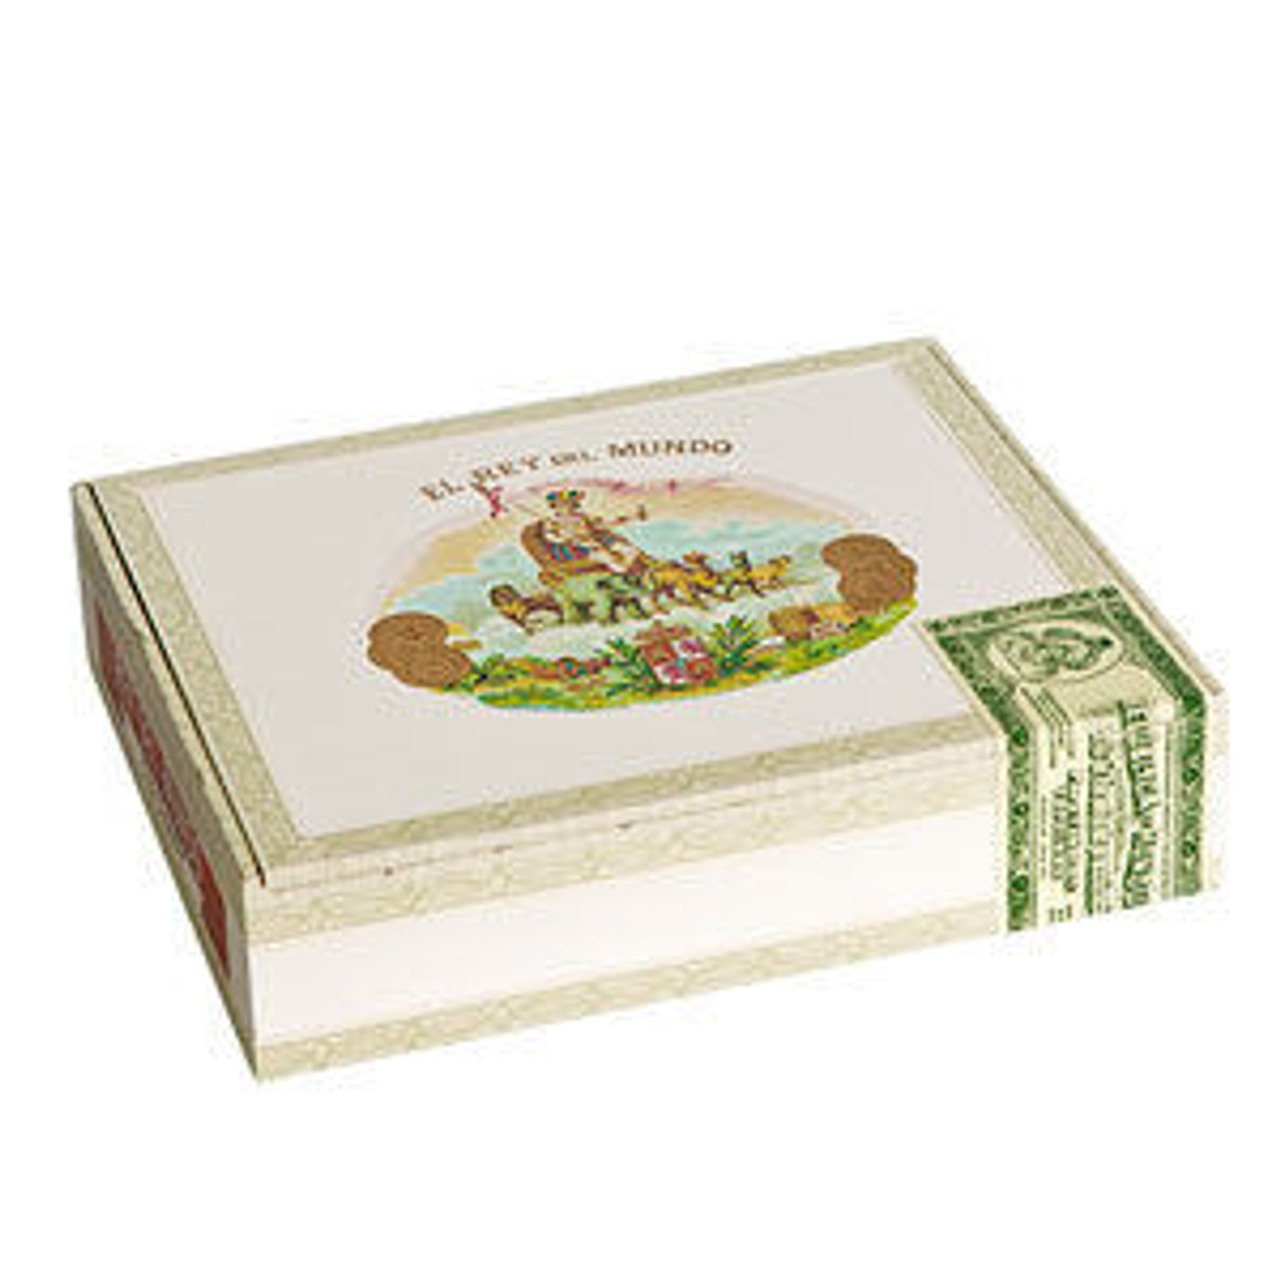 El Rey del Mundo Reserva Salado Cigars - 6 x 54 (Box of 40) *Box